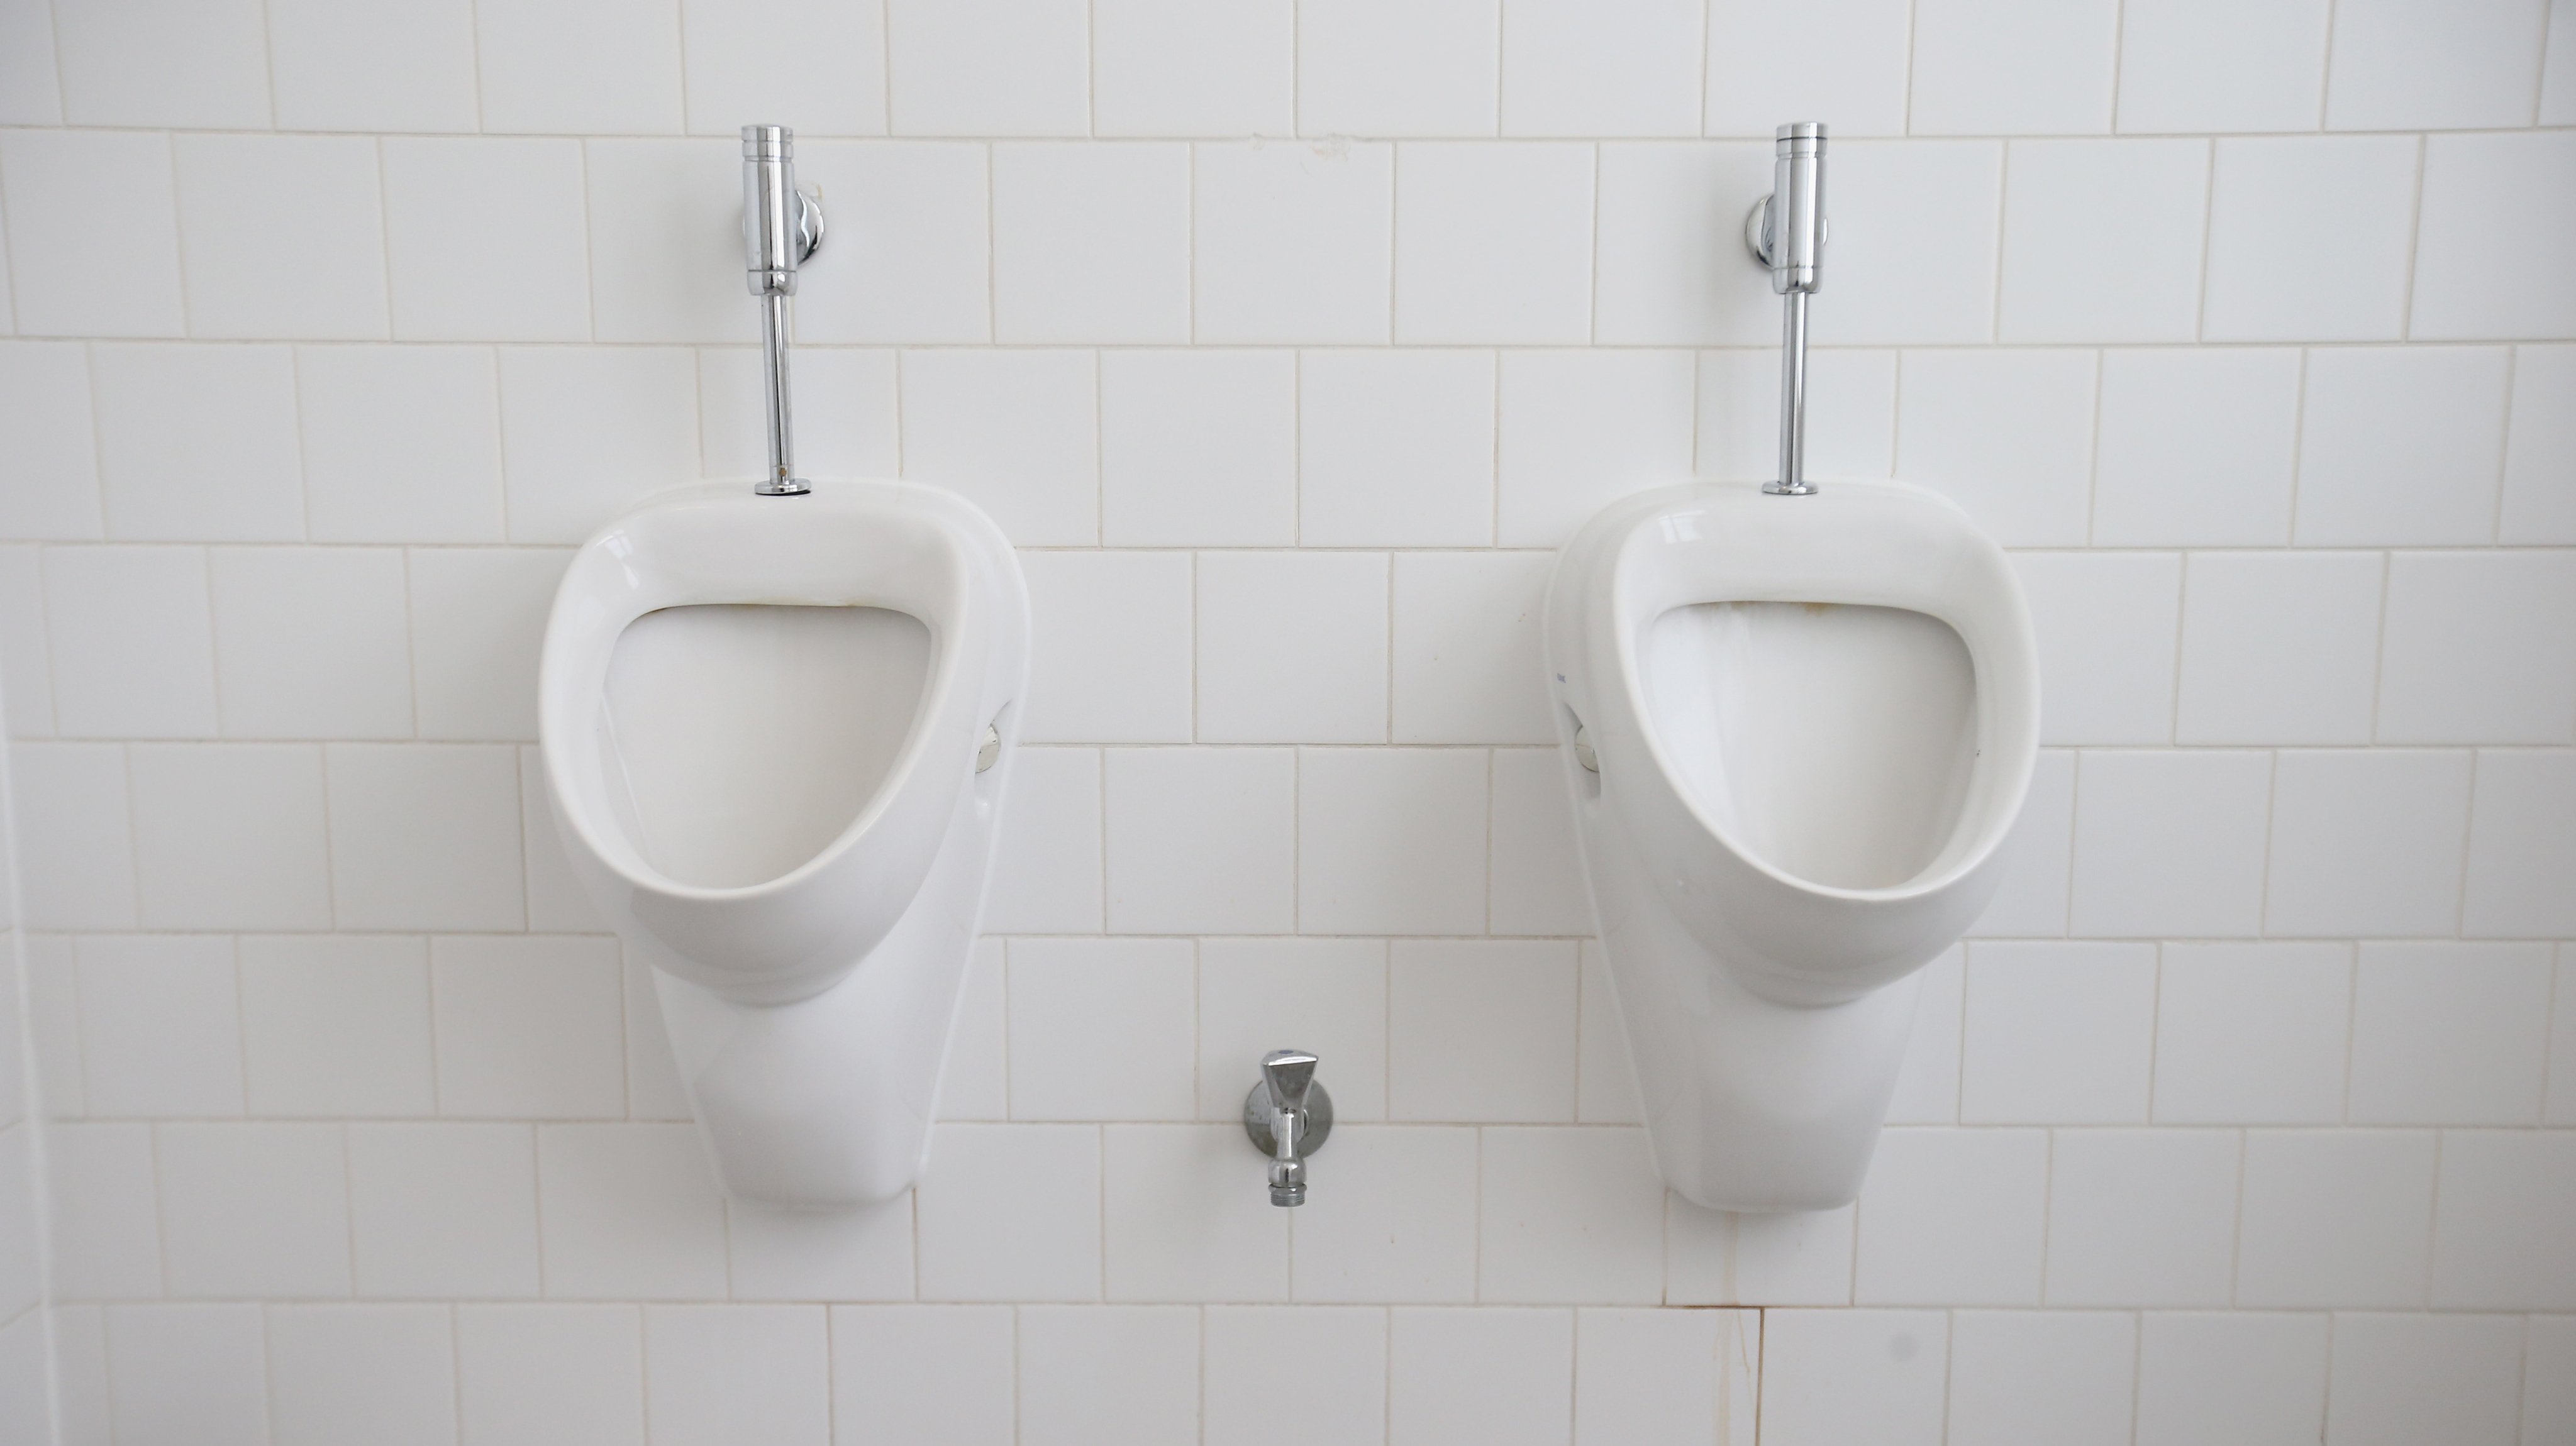 Berlin Inaugurates Gender-Neutral Toilets